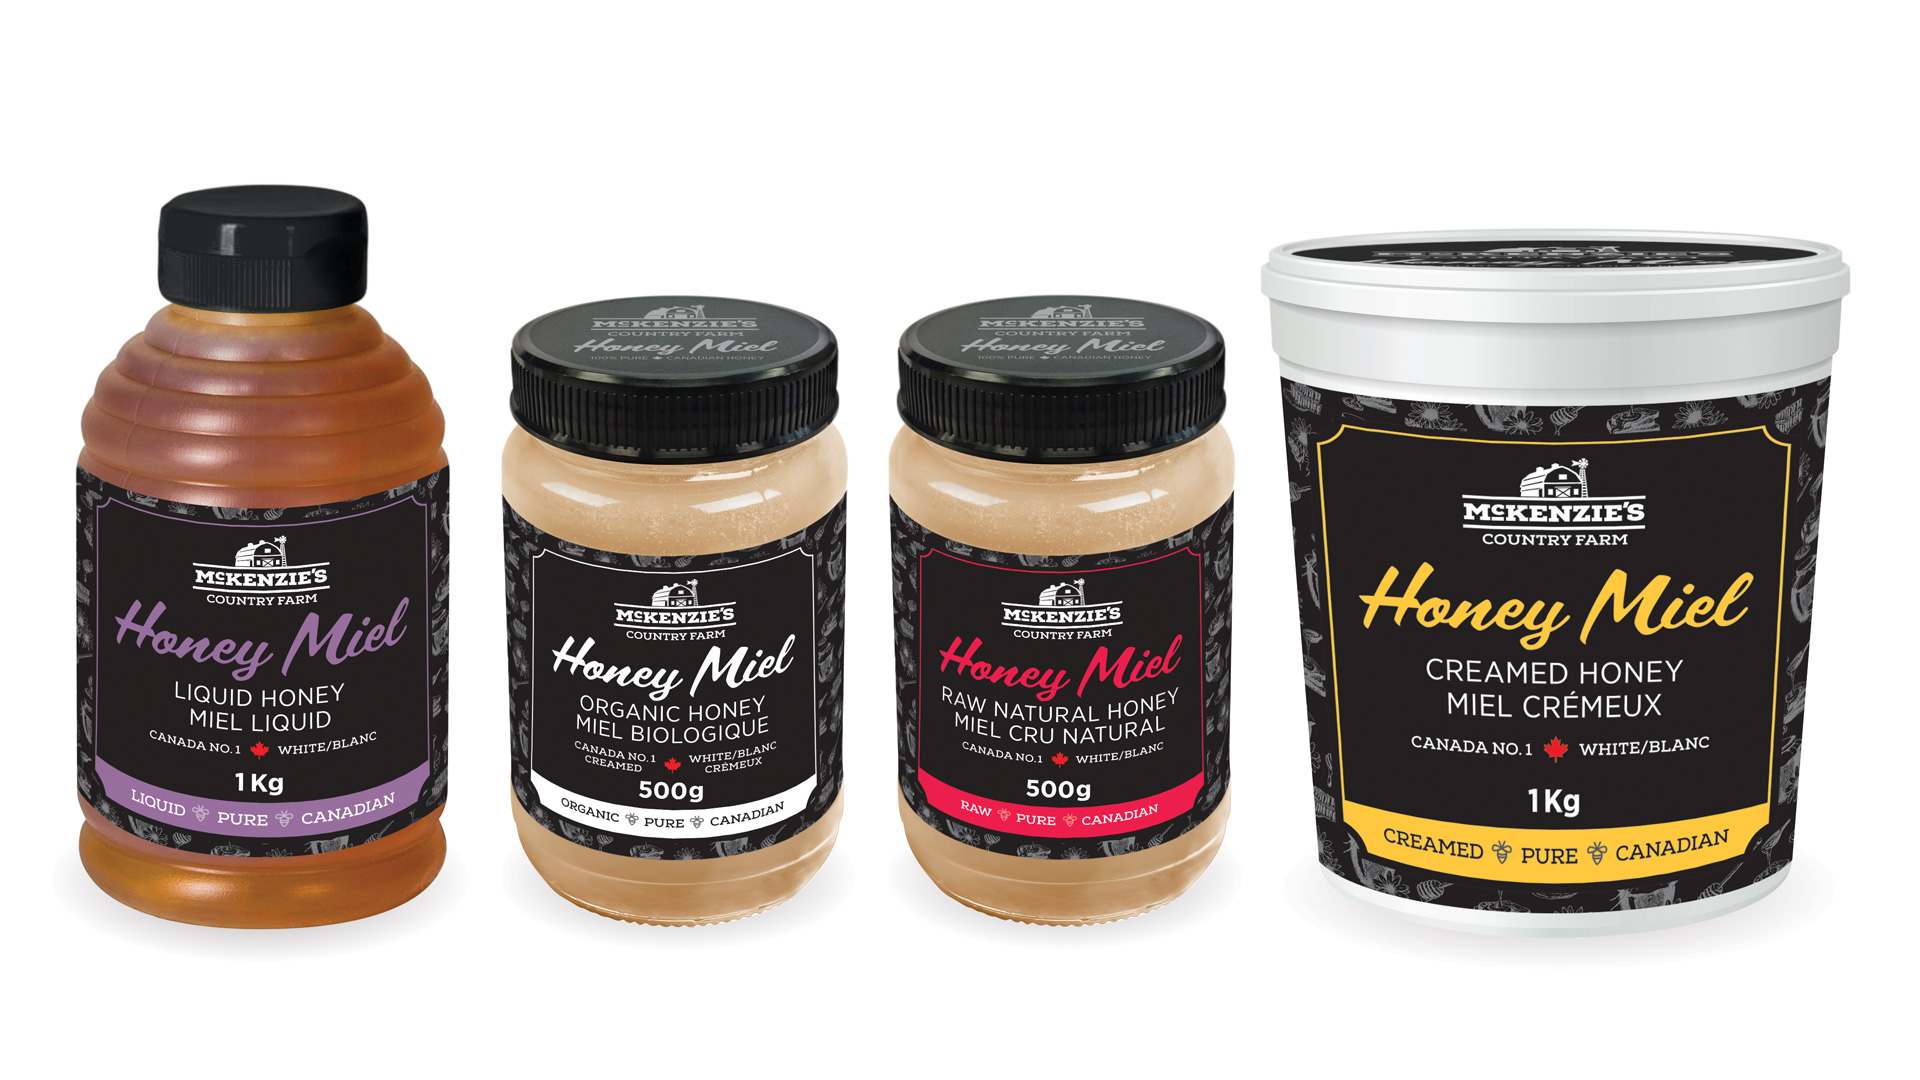 McKenzie's Country Farm Honey product line